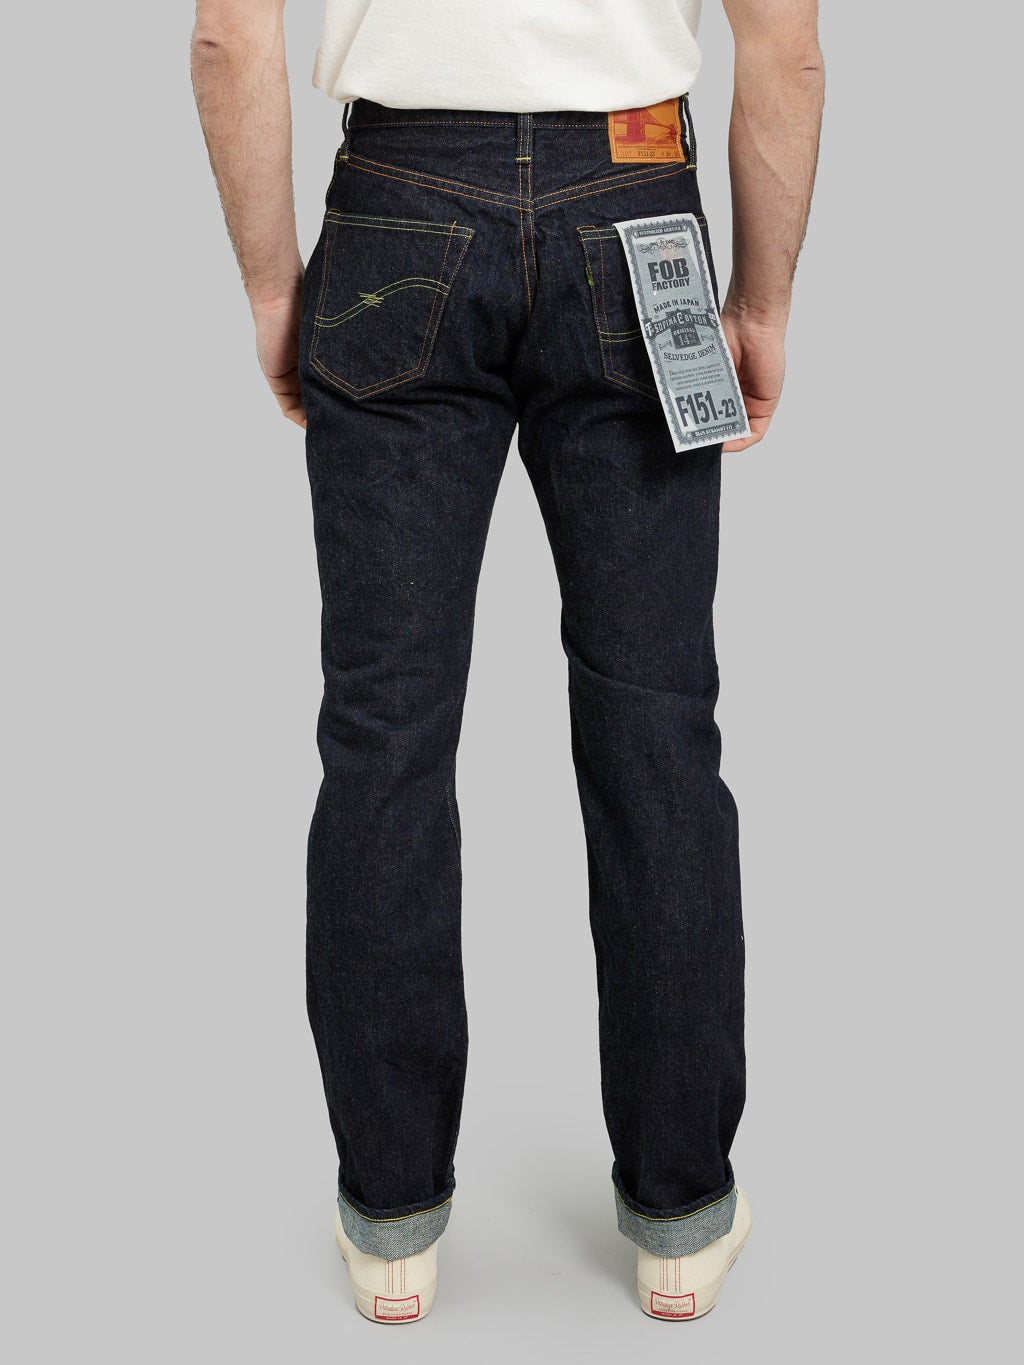 Fob factory slim straight denim jeans back rise